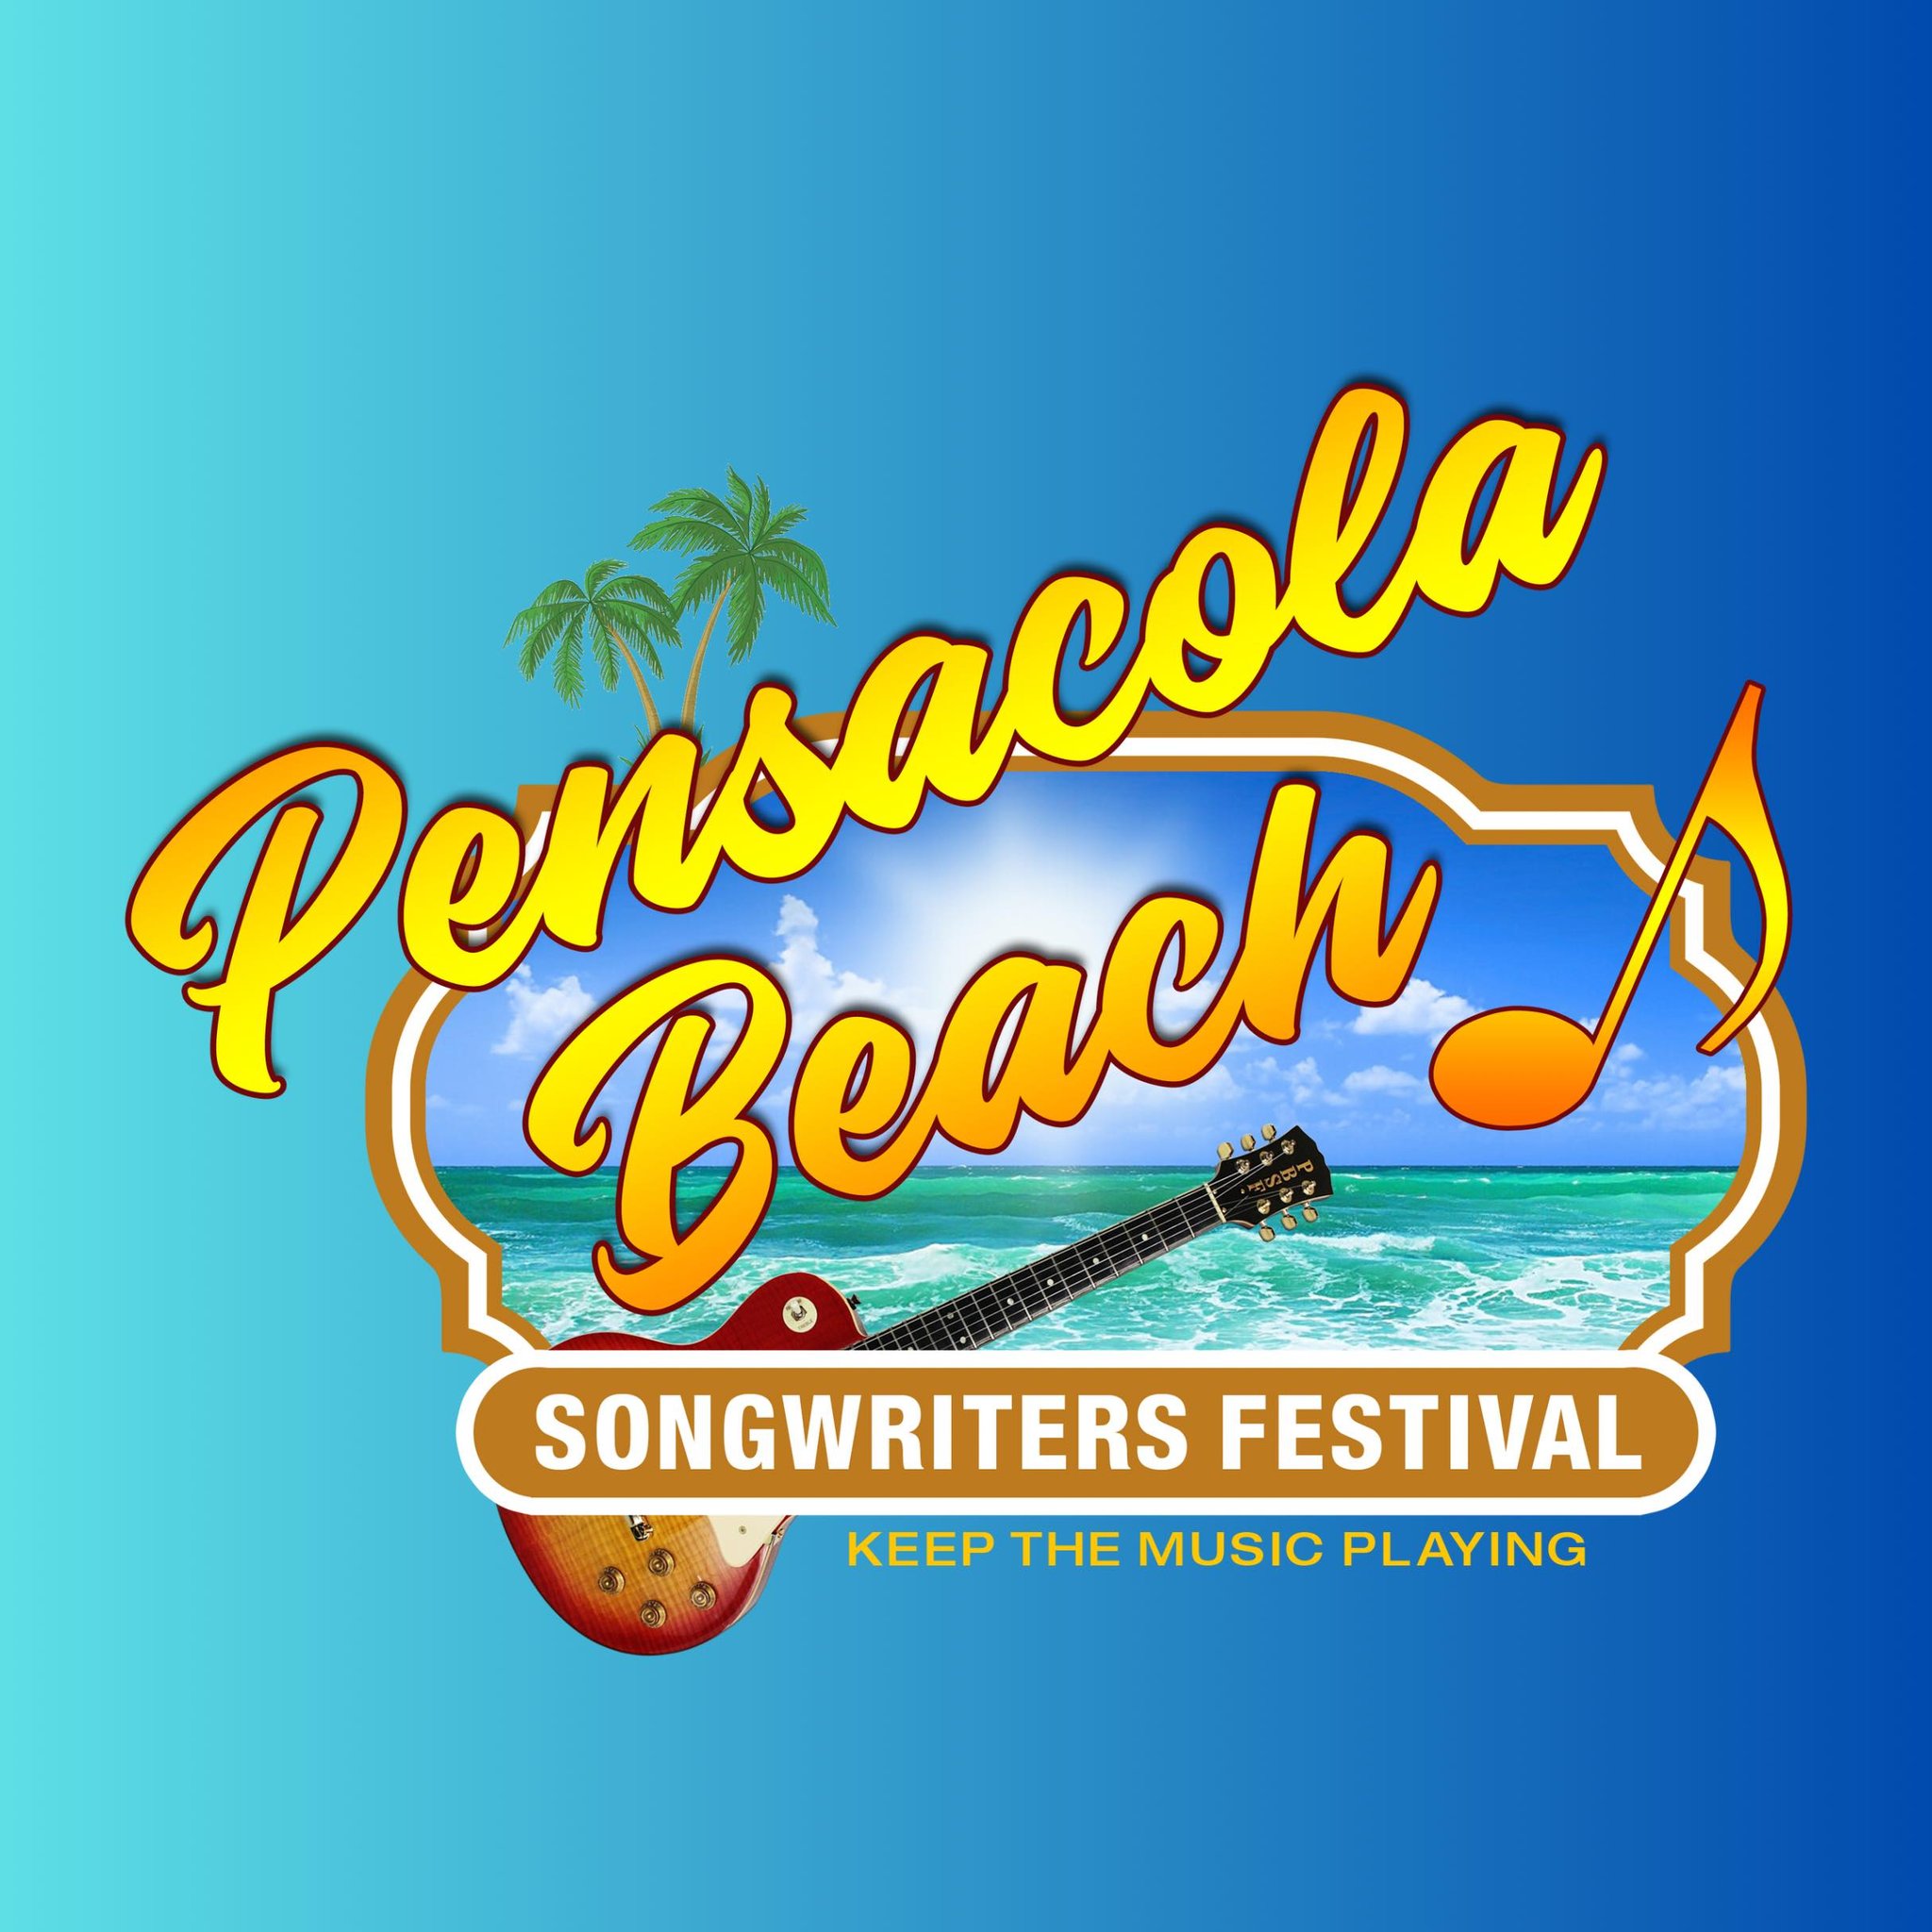 Pensacola Beach  Annual Songwriters Festival